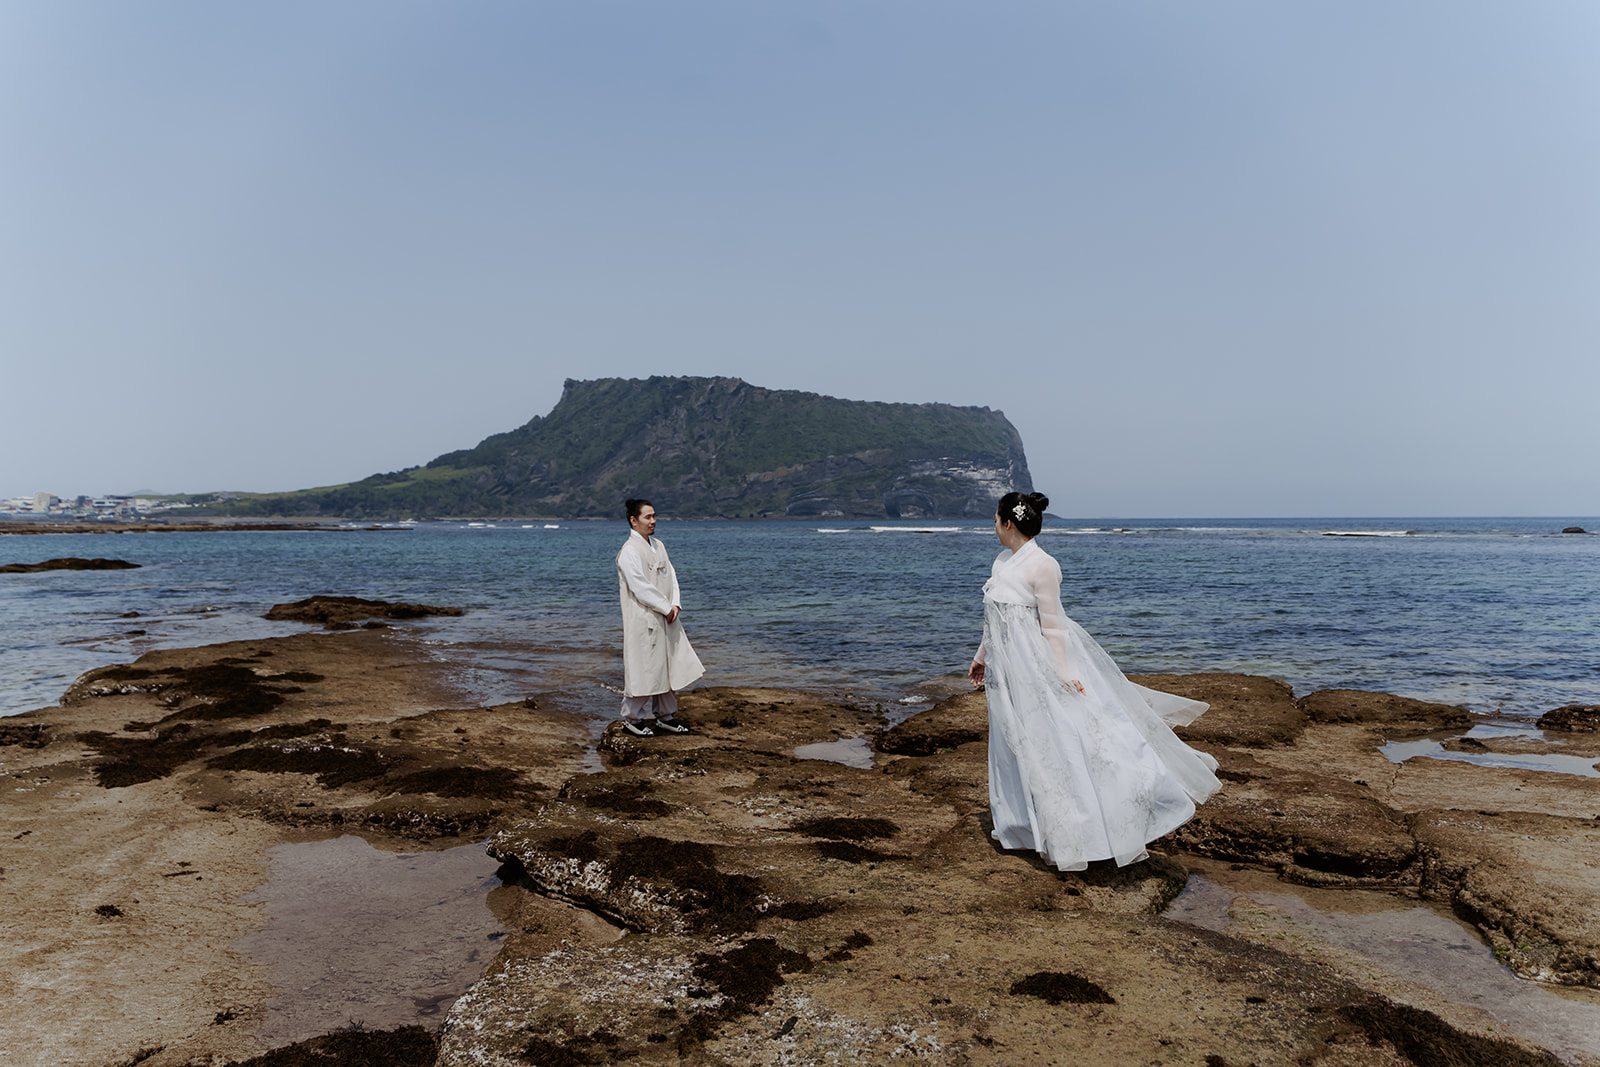 Asian couple standing on rocks near the ocean in Korea.